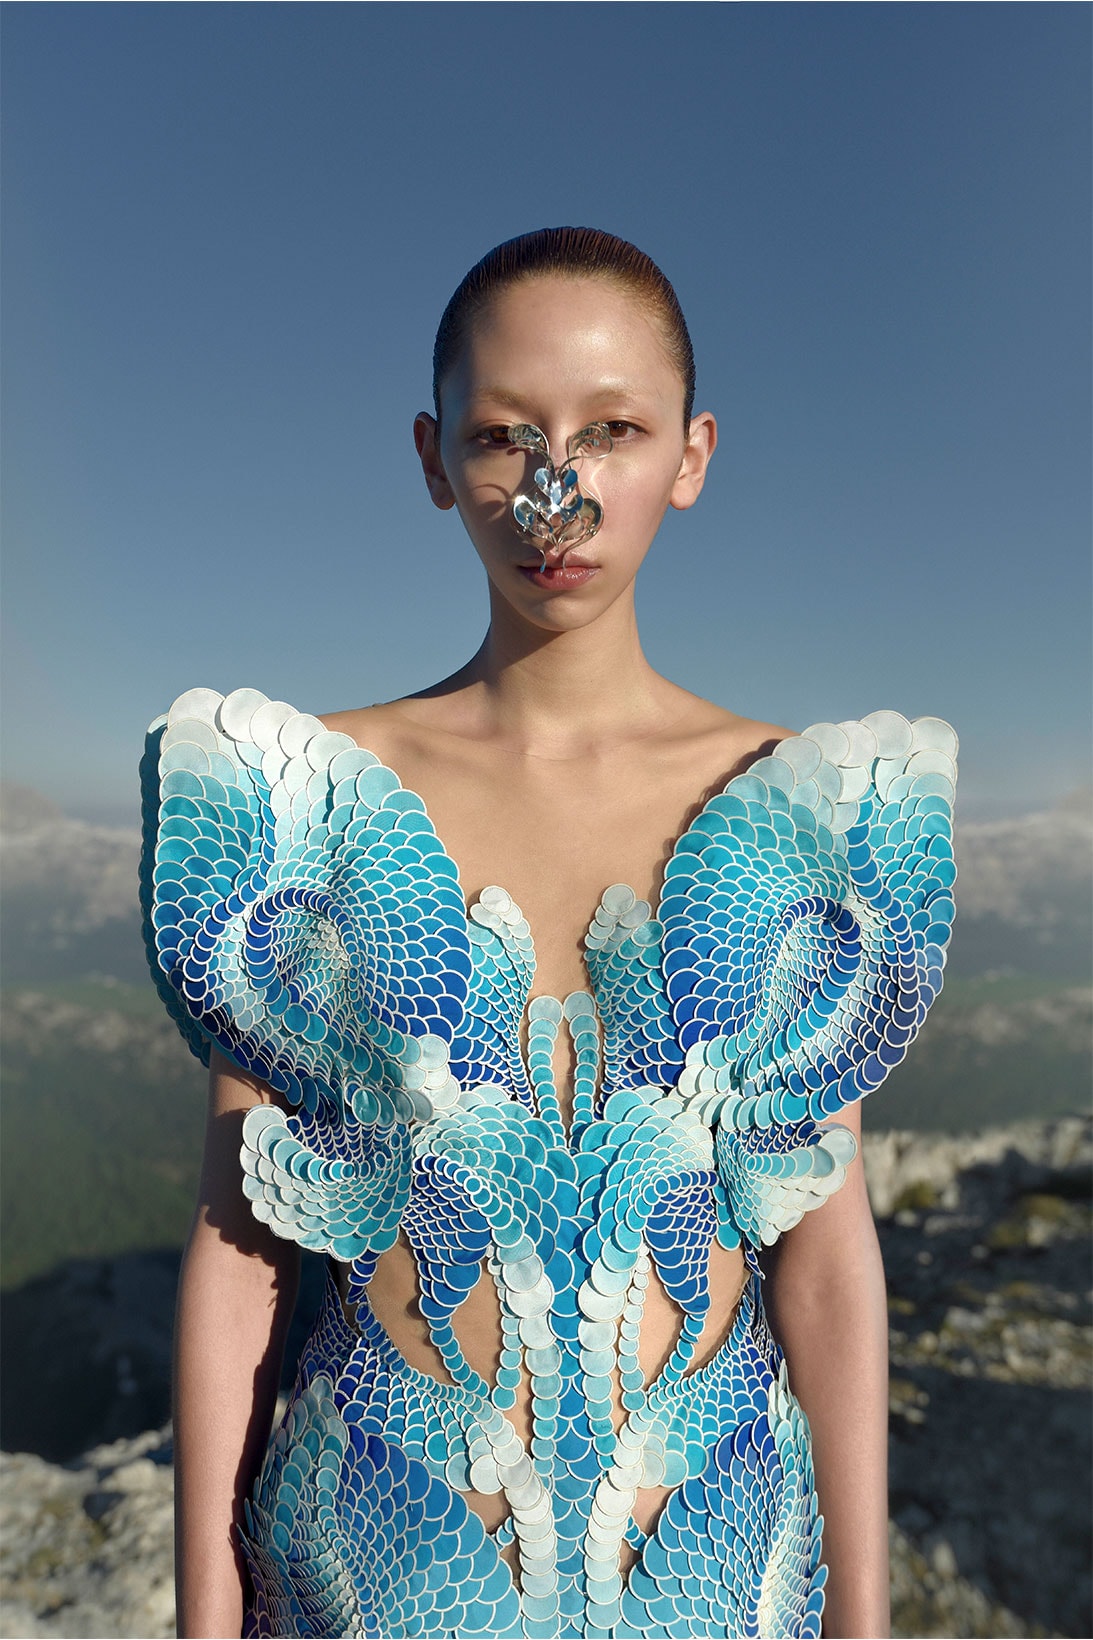 parley iris van herpen earthrise haute couture collaboration dress blue ocean plastic sustainable